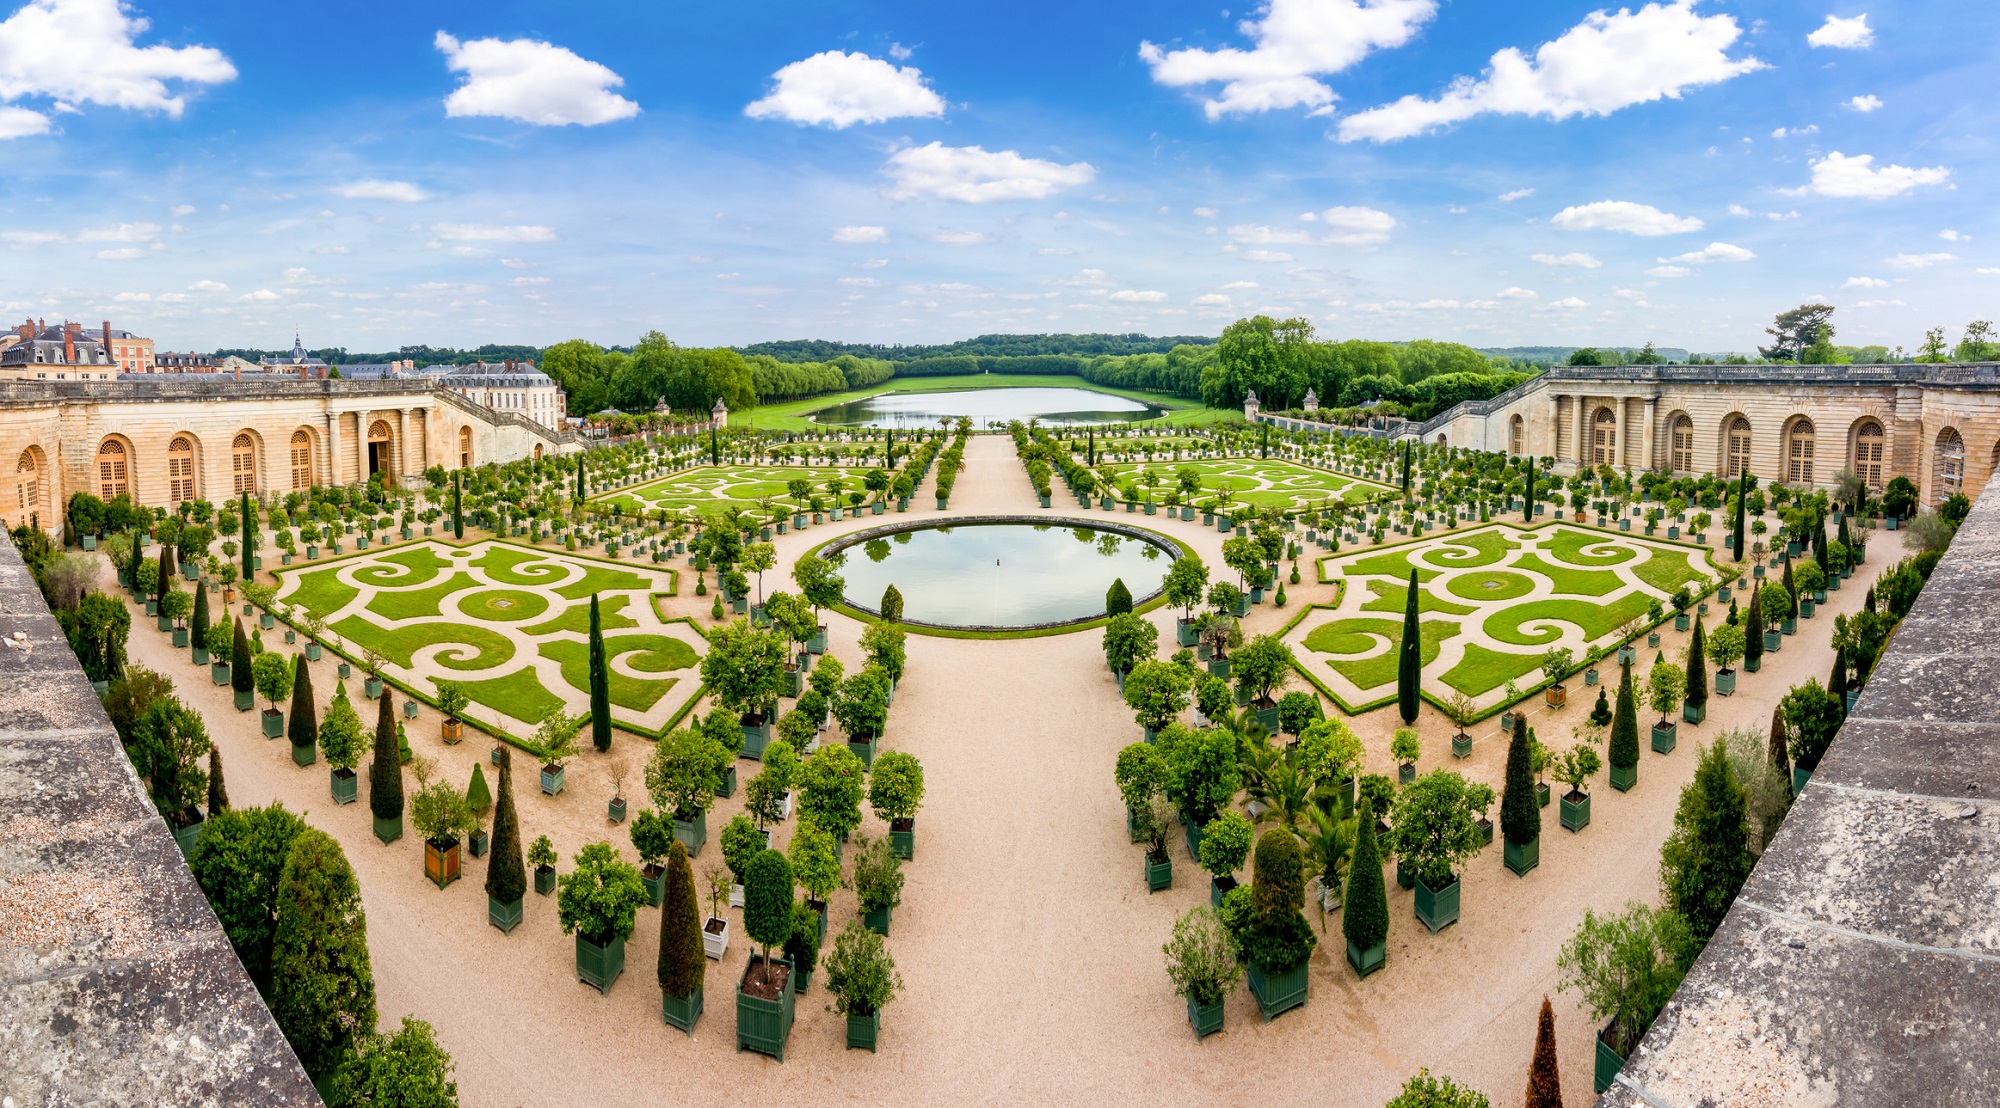 Paris, France - May 2019: Versailles formal gardens